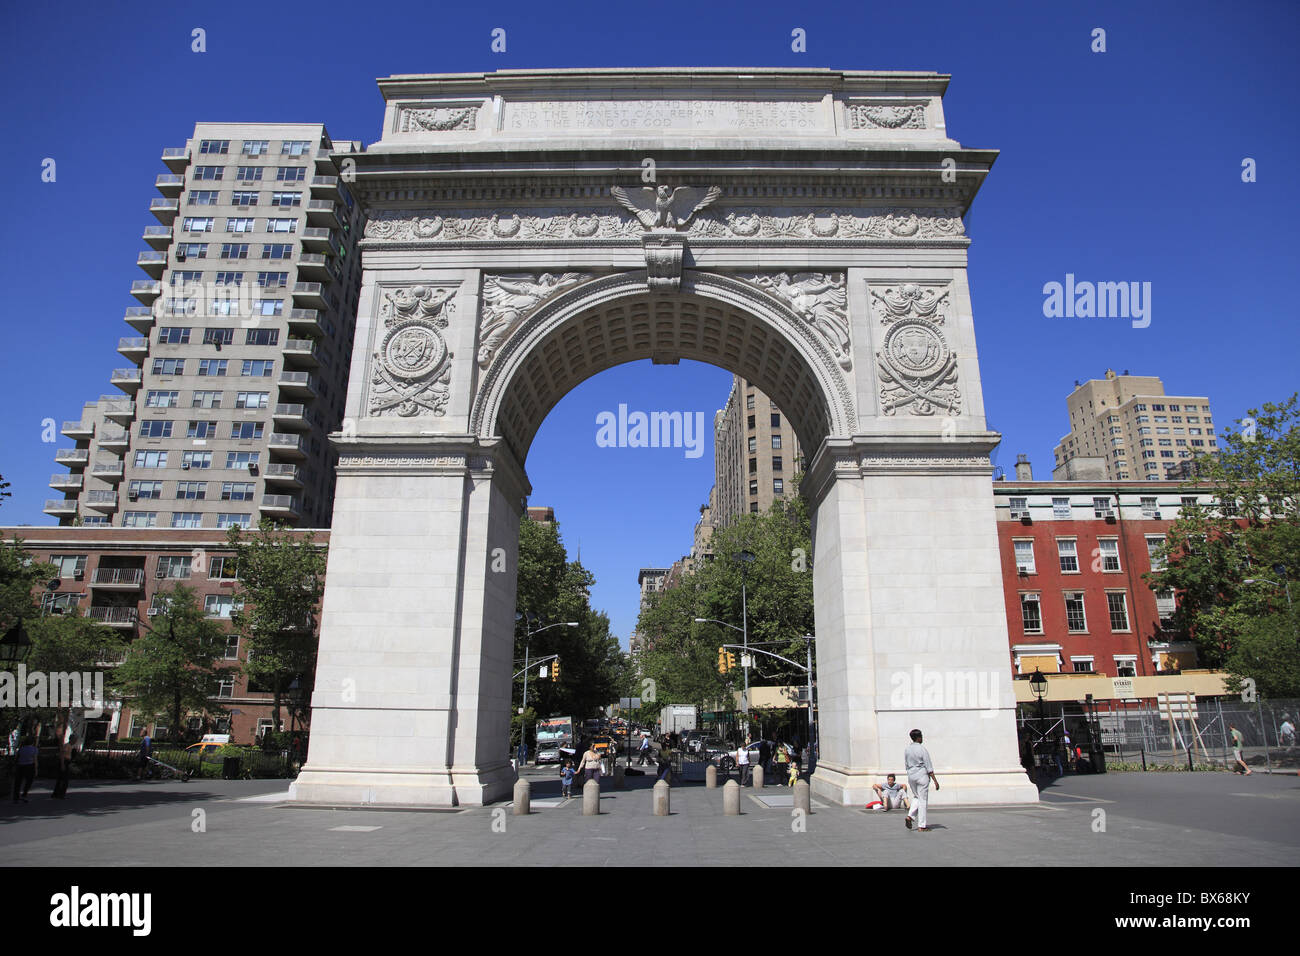 Washington Square Park, Washington Square Arch, Greenwich Village, West Village, Manhattan, New York City, USA Stockfoto